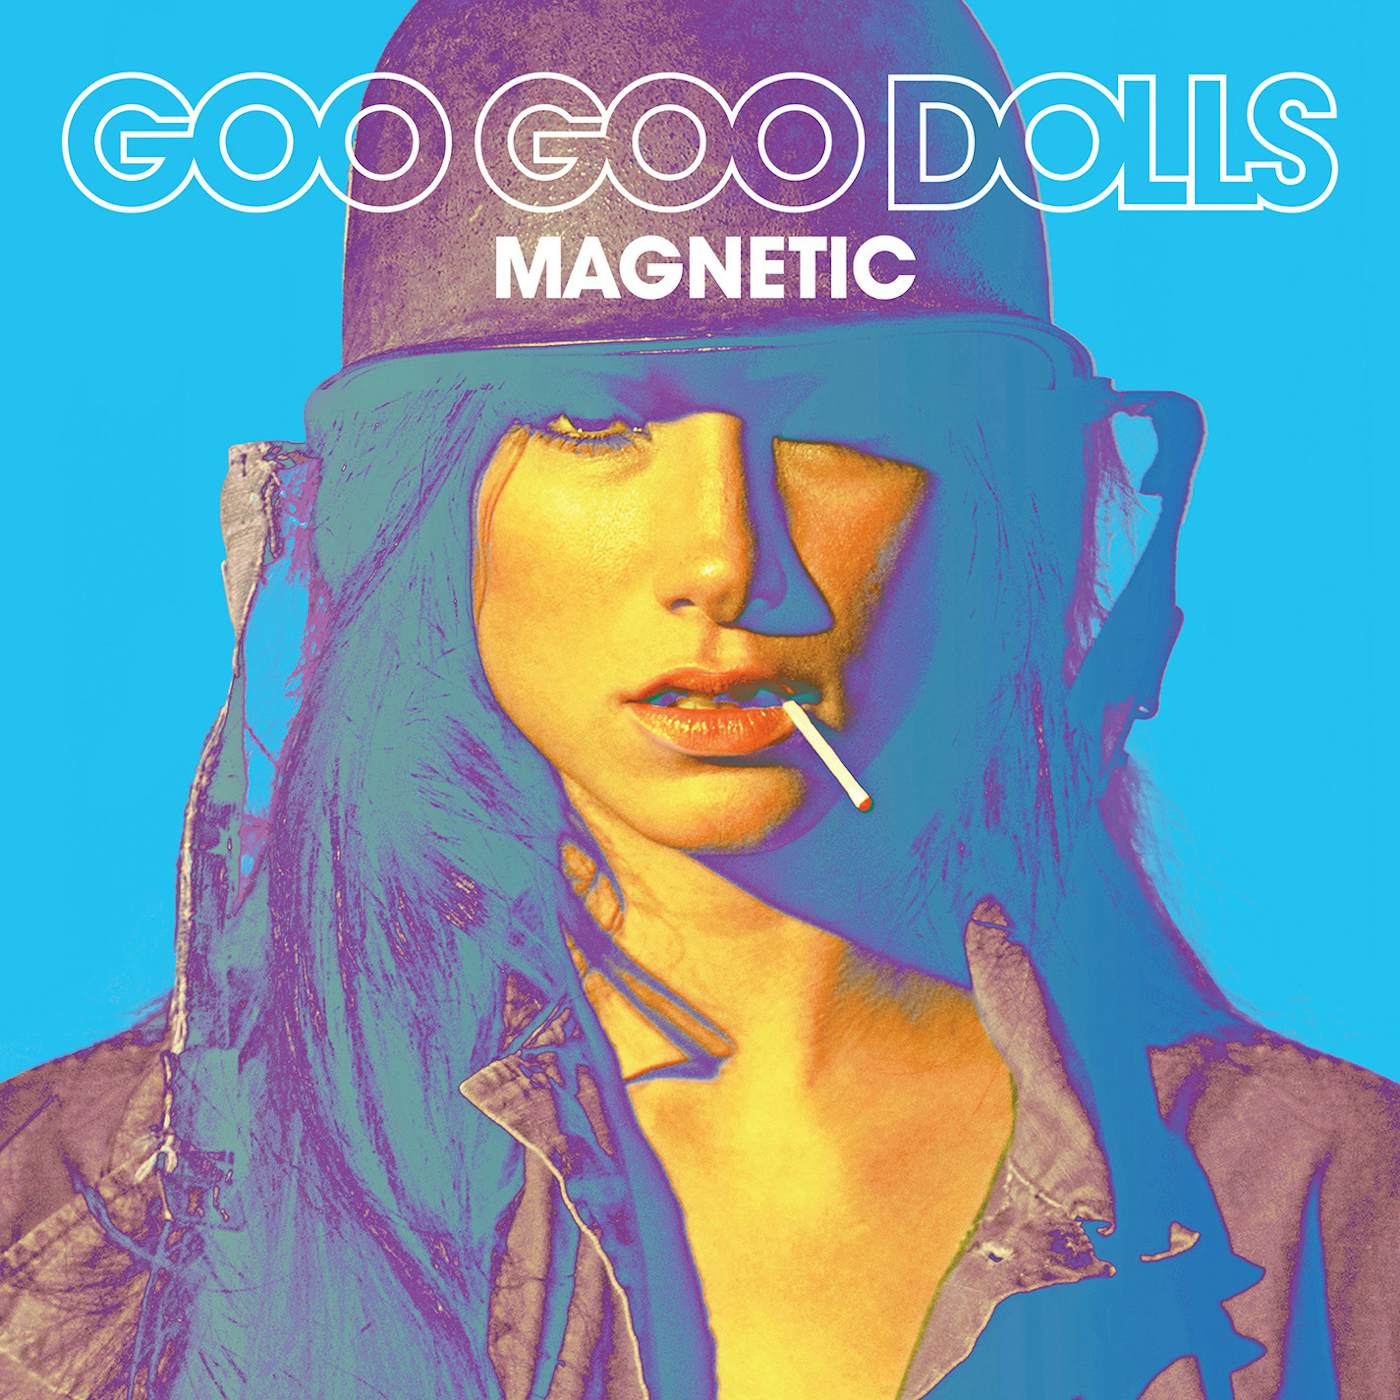 The Goo Goo Dolls Magnetic Vinyl Record